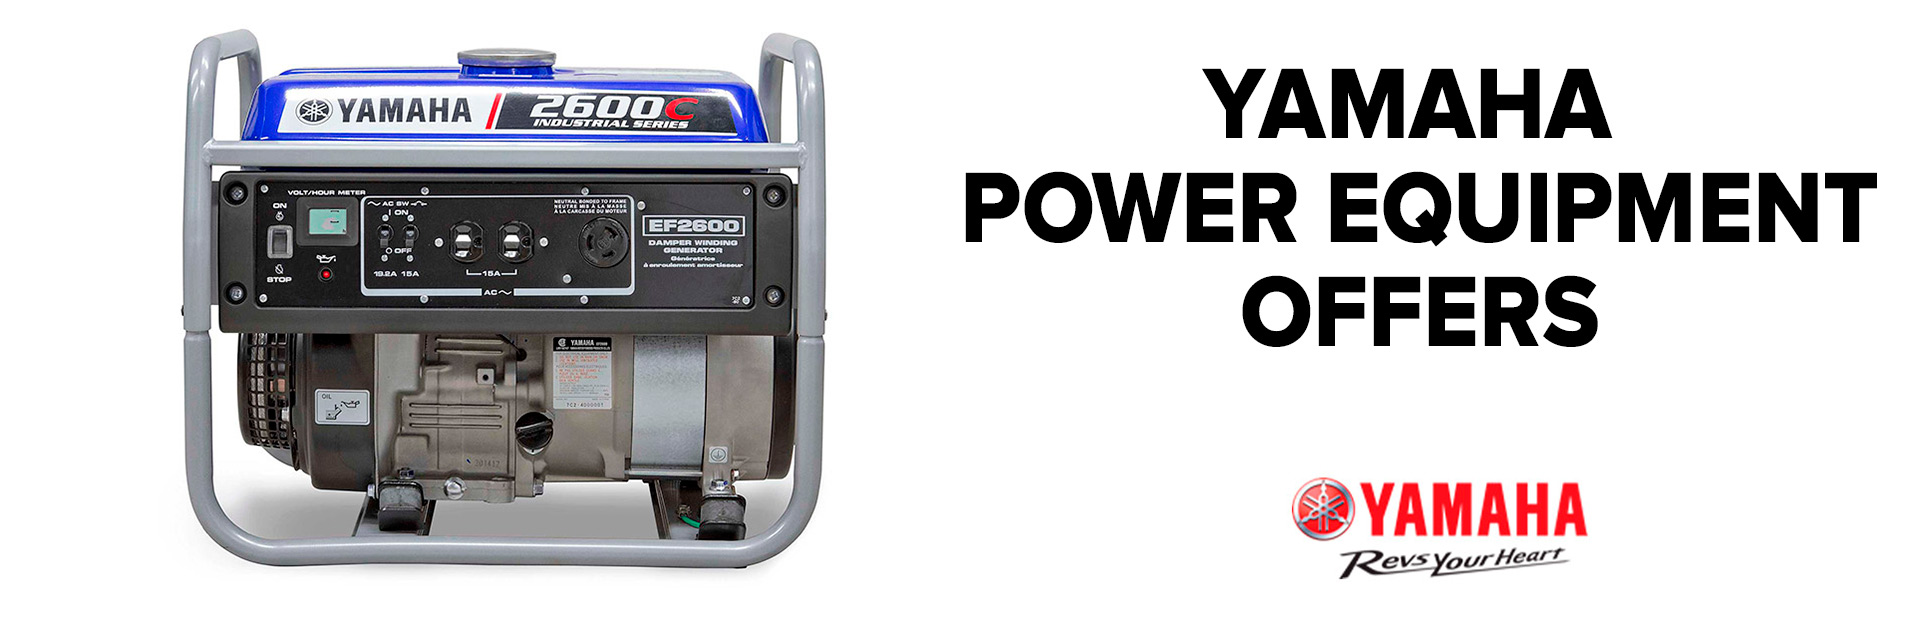 Yamaha Power Equipment Offers